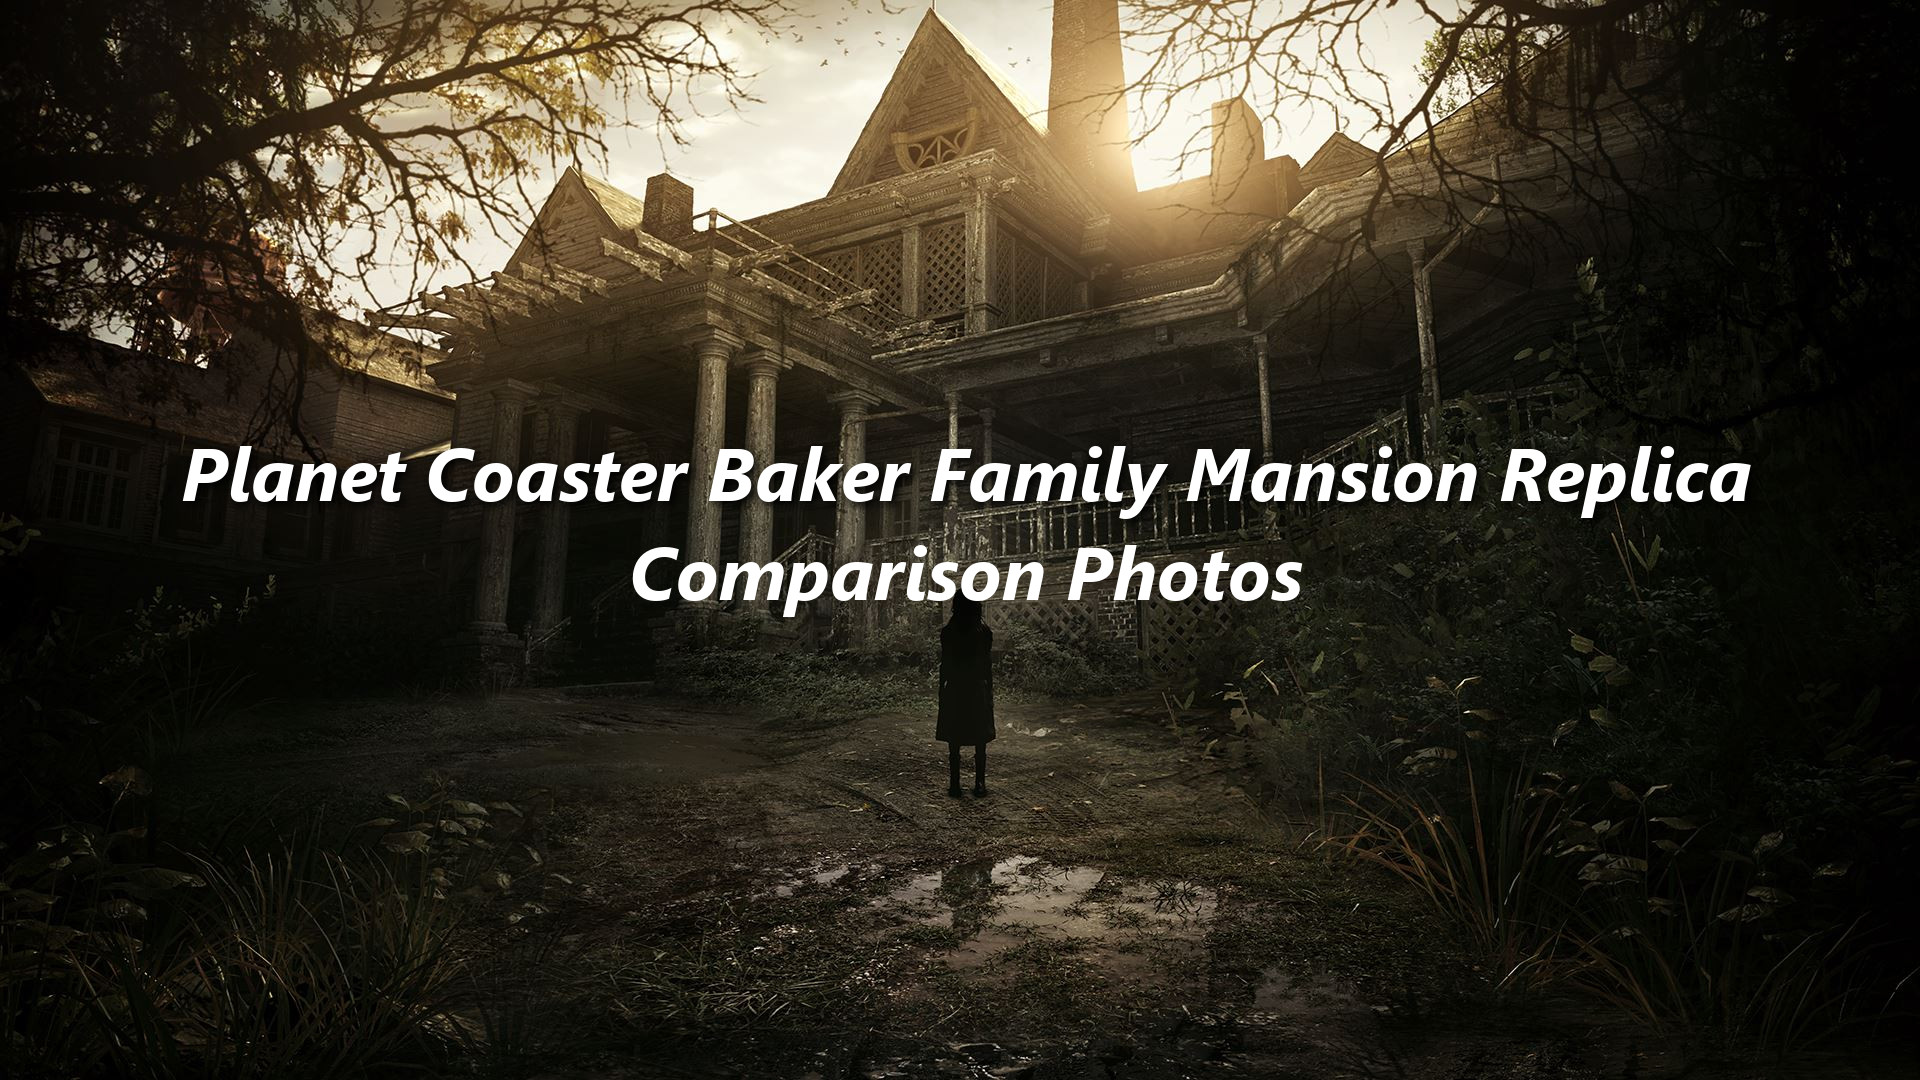 Planet Coaster Baker Family Mansion Comparison Photos